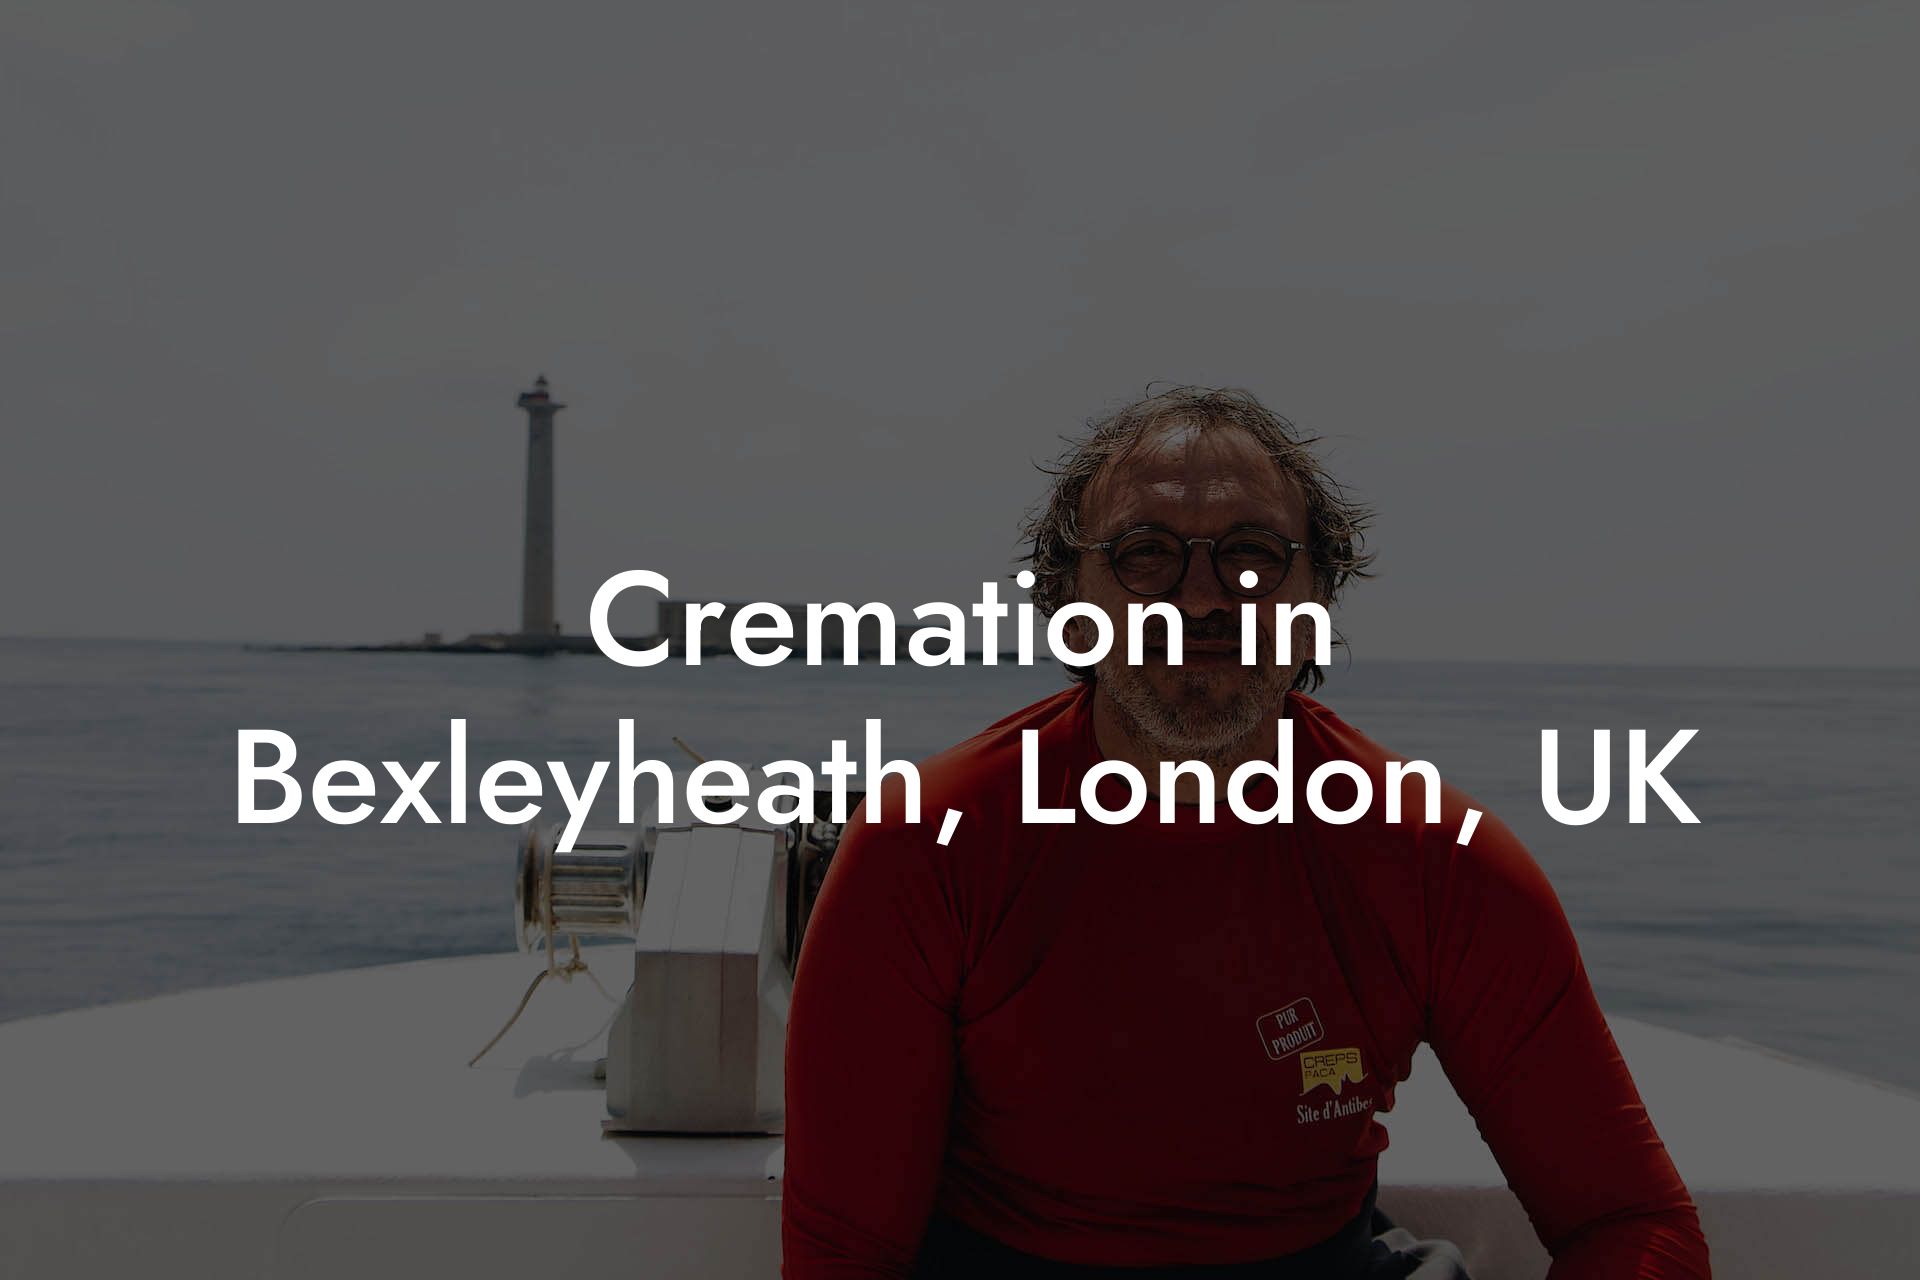 Cremation in Bexleyheath, London, UK